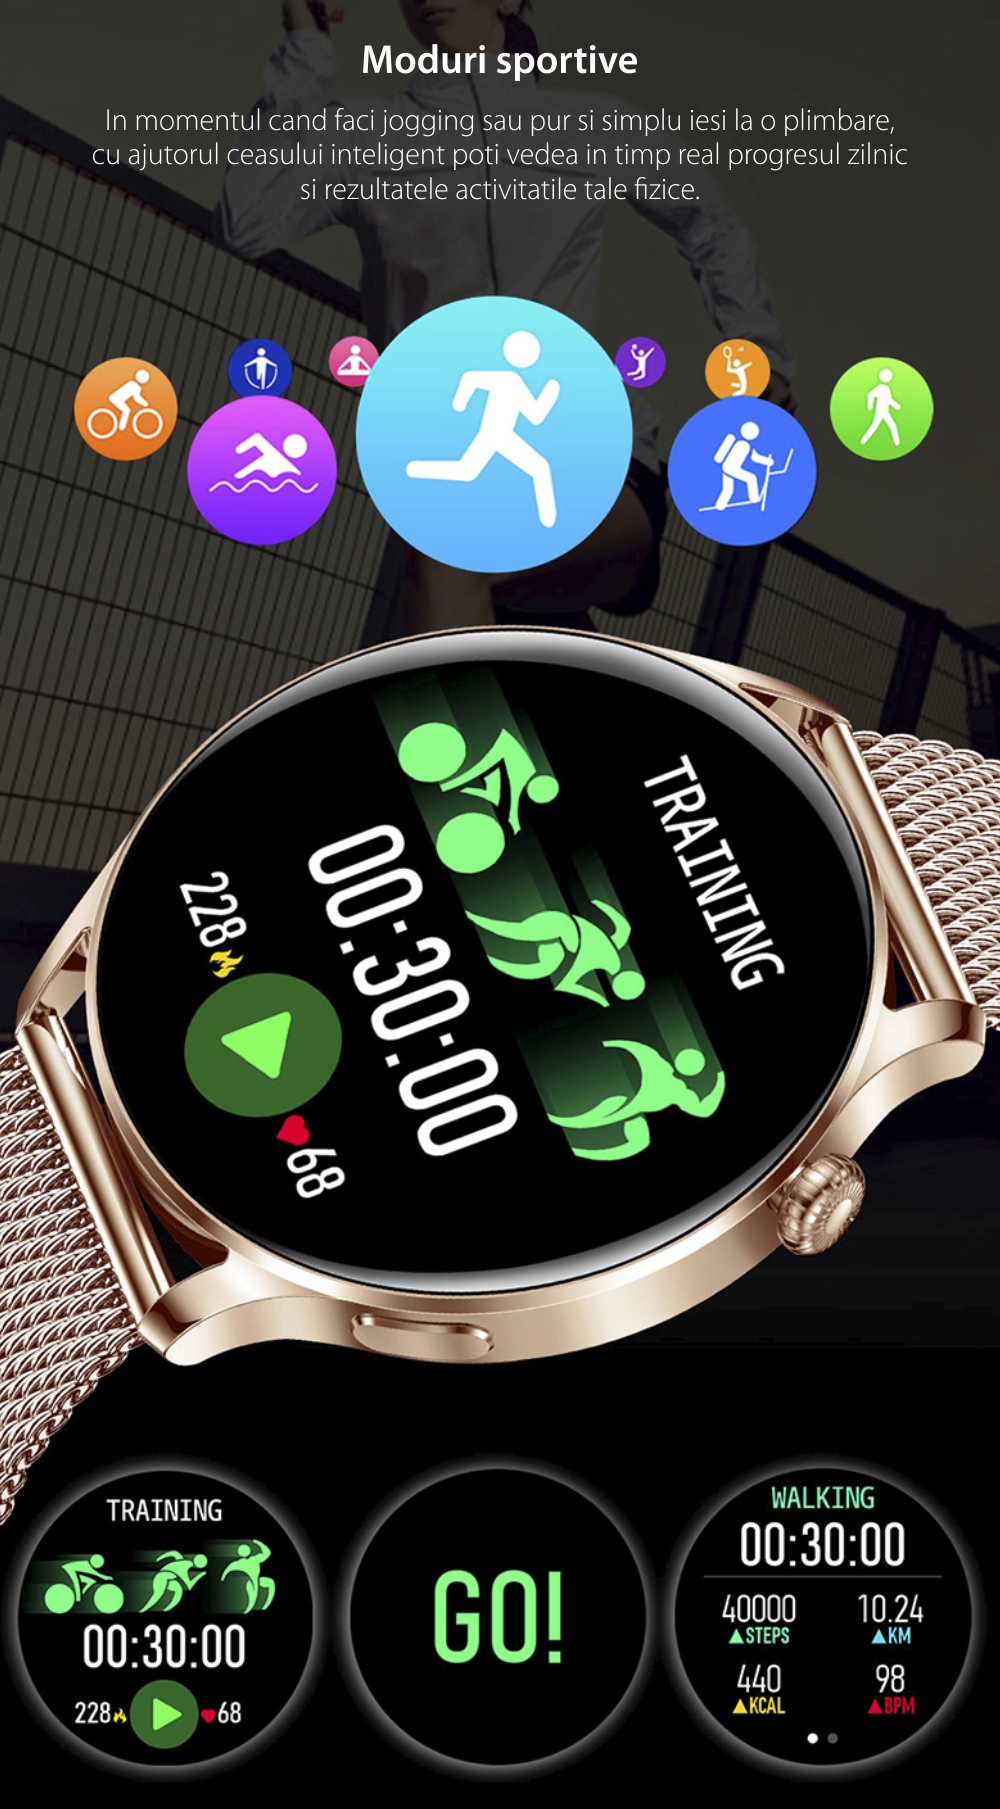 Ceas Smartwatch XK Fitness AK37 cu Functii monitorizare sanatate, Notificari, Bluetooth, Cronometru, Bratara metalica, Argintiu